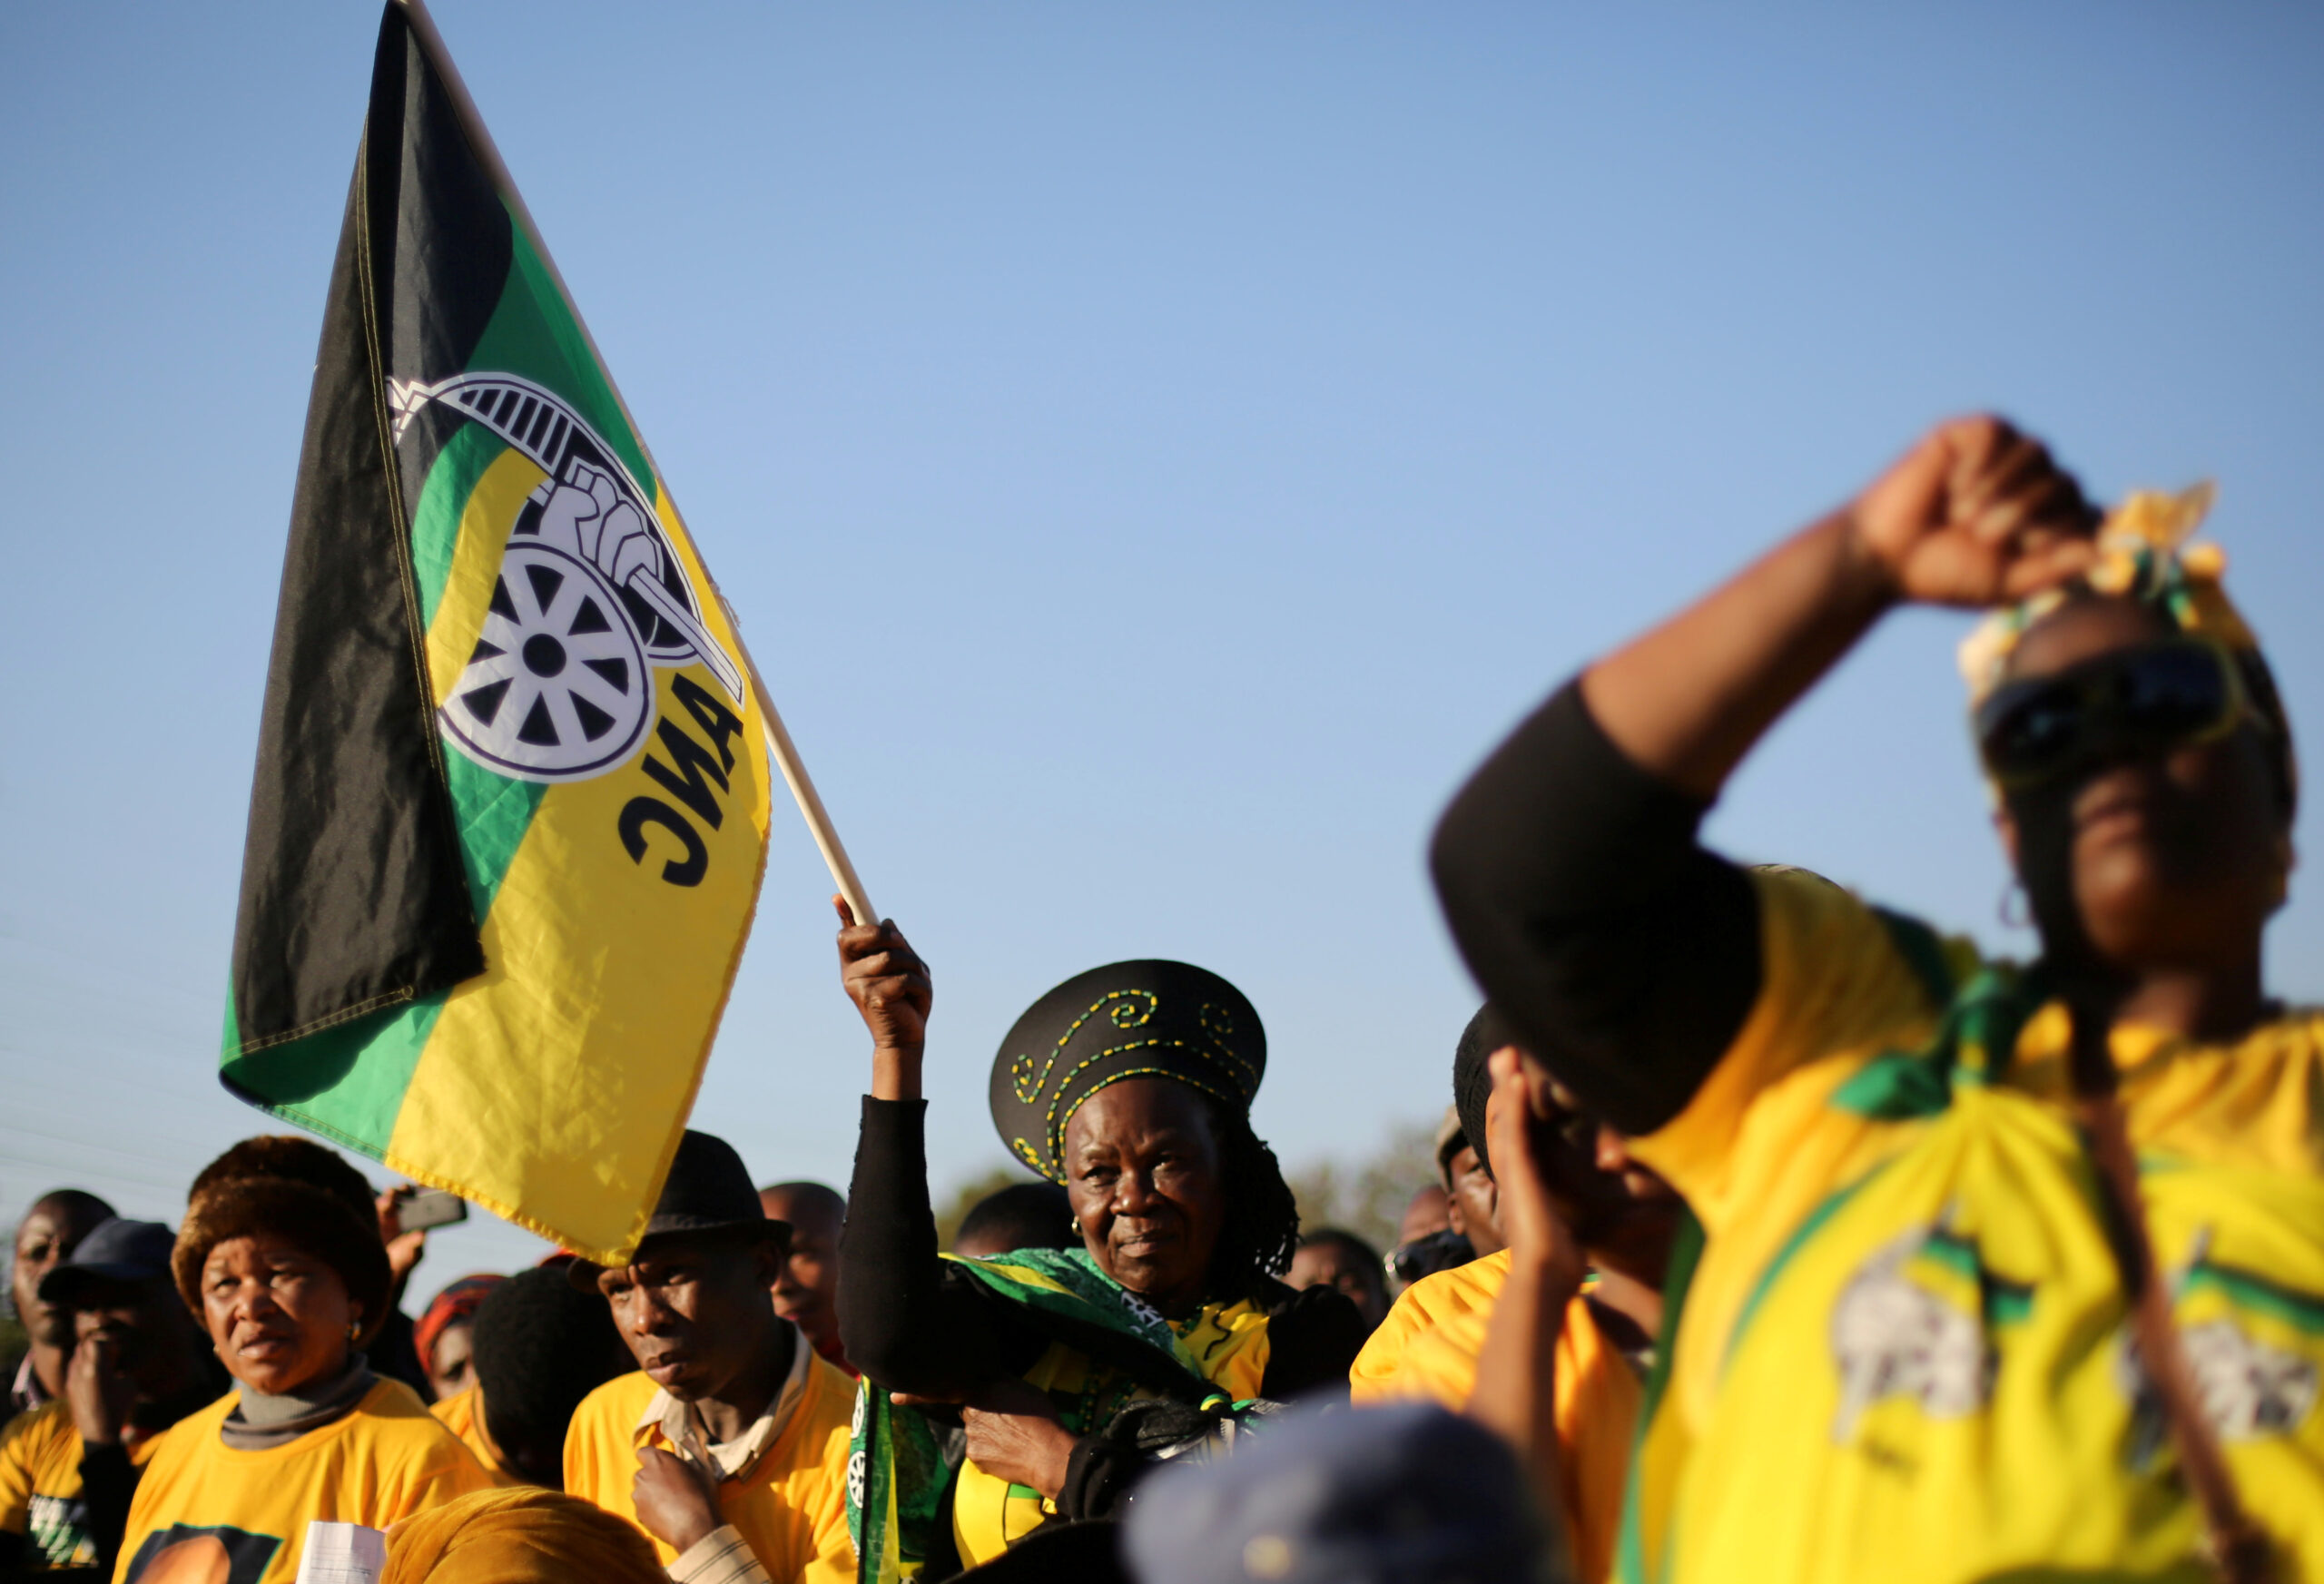 Corruption, sluggish growth widen crack in South Africa’s ANC edifice